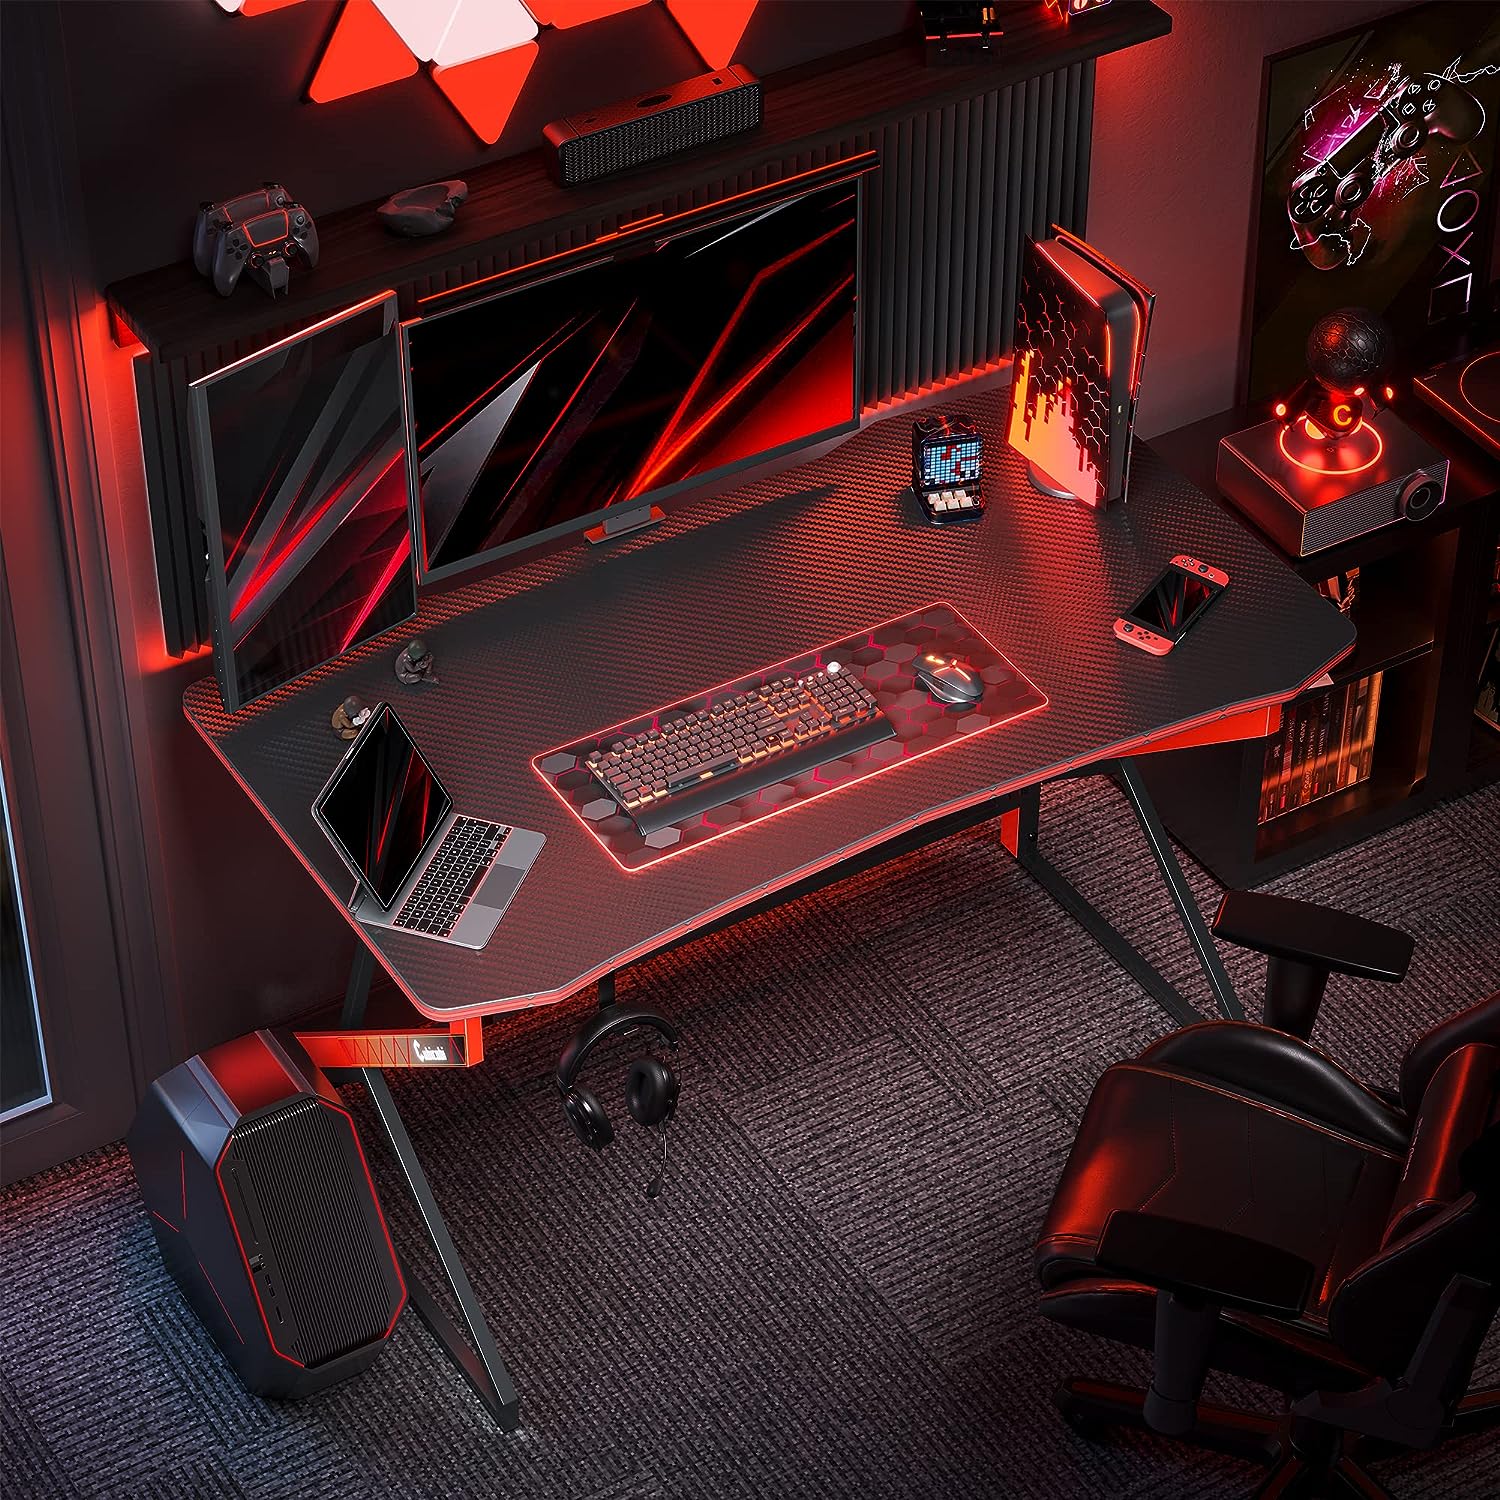 CubiCubi Gaming Desk Z Shaped 47 inch - Carbon Fiber Surface with Headphone Hook